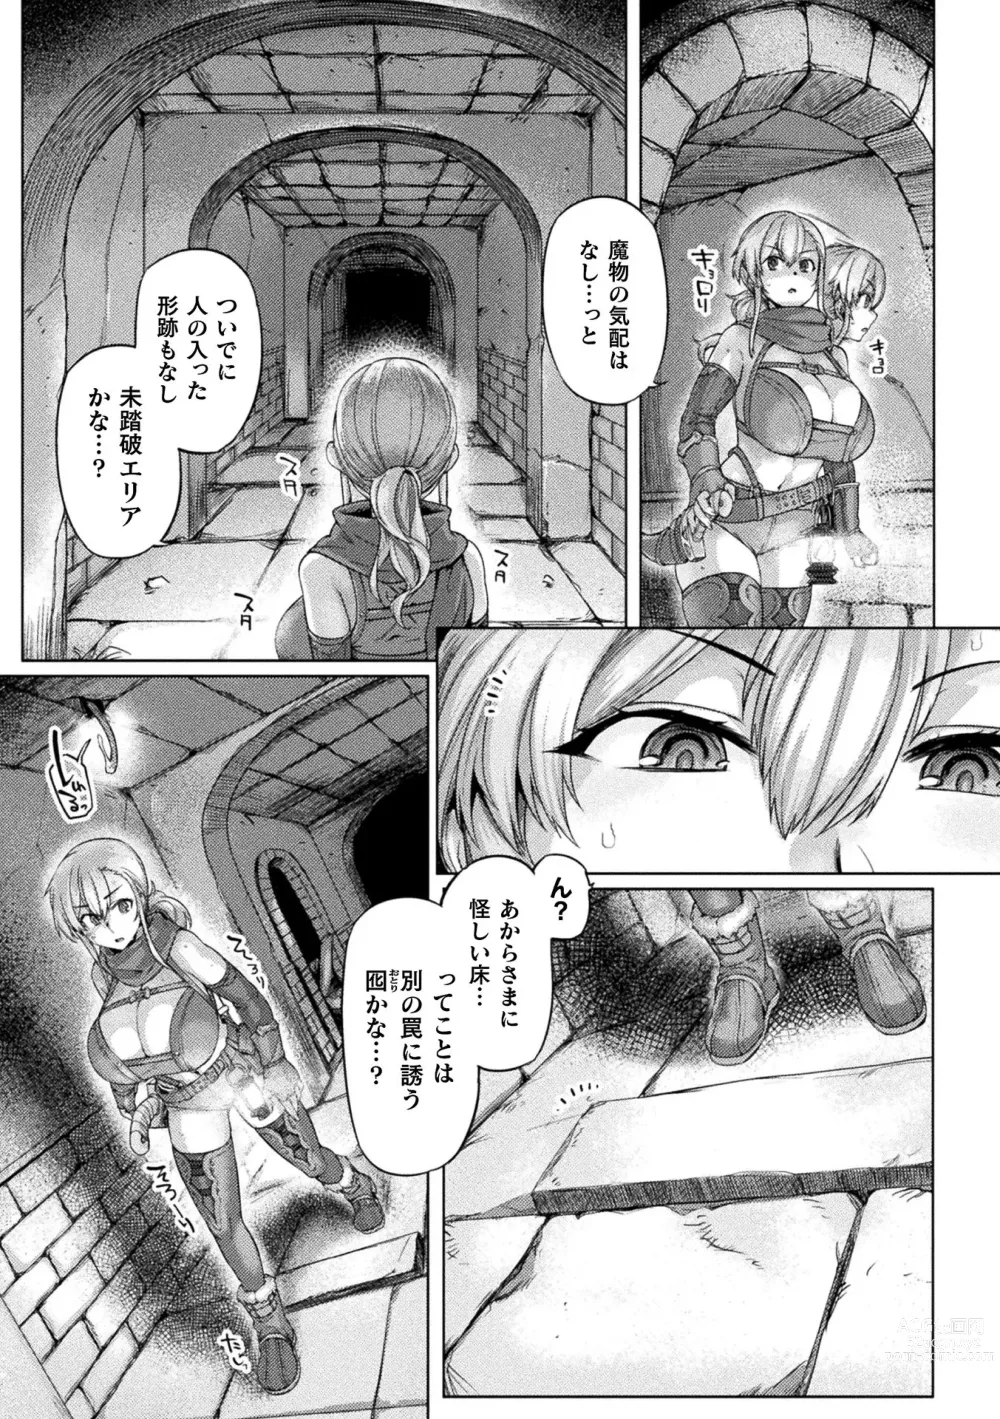 Page 7 of manga Kusshita Otome ga Ochiru Koro - When a surrendered maiden becomes sexually degraded